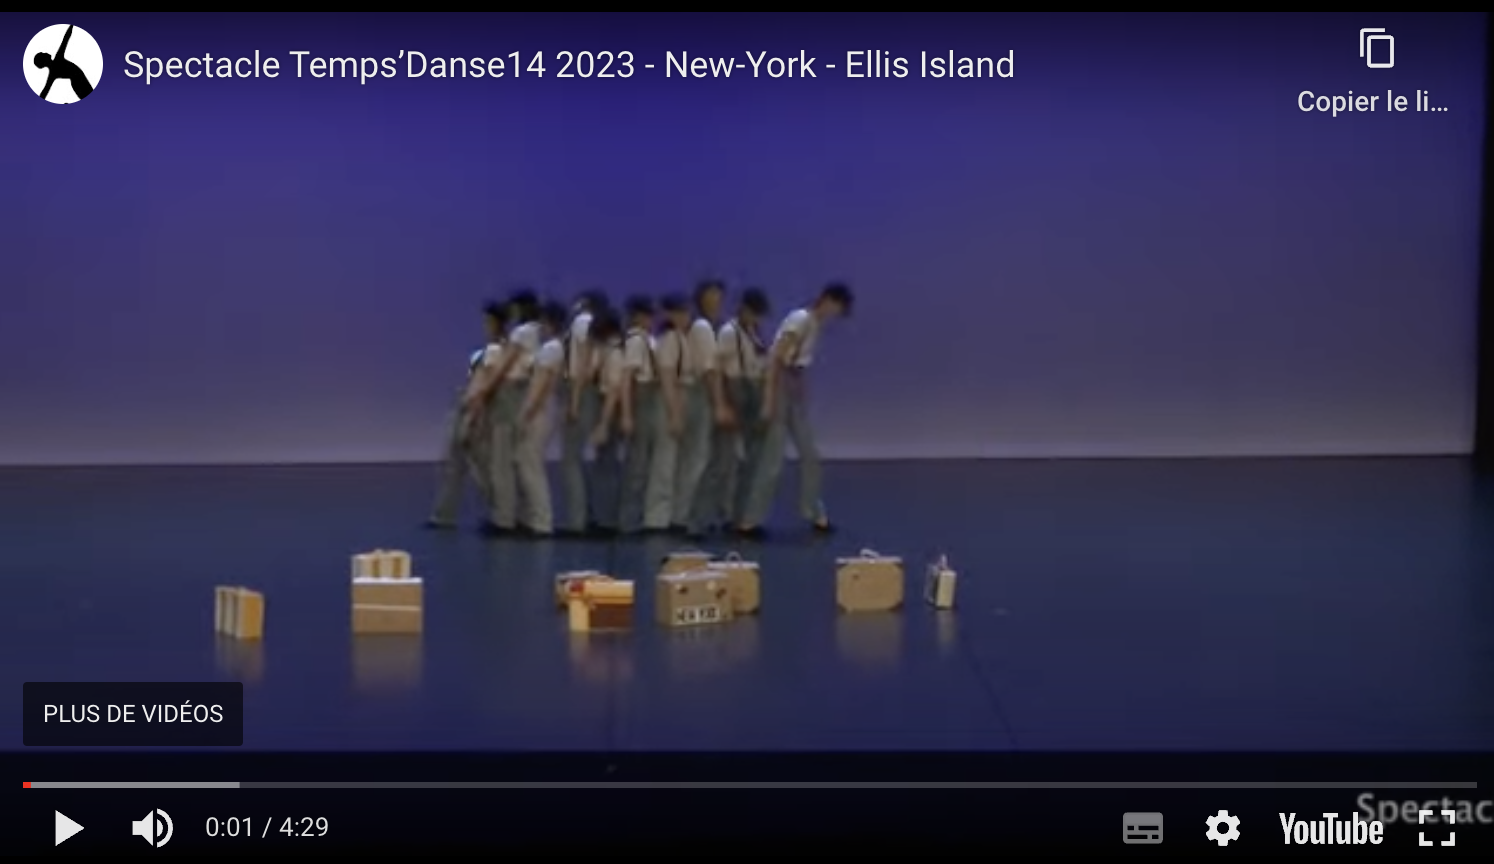 New-York - Ellis Island